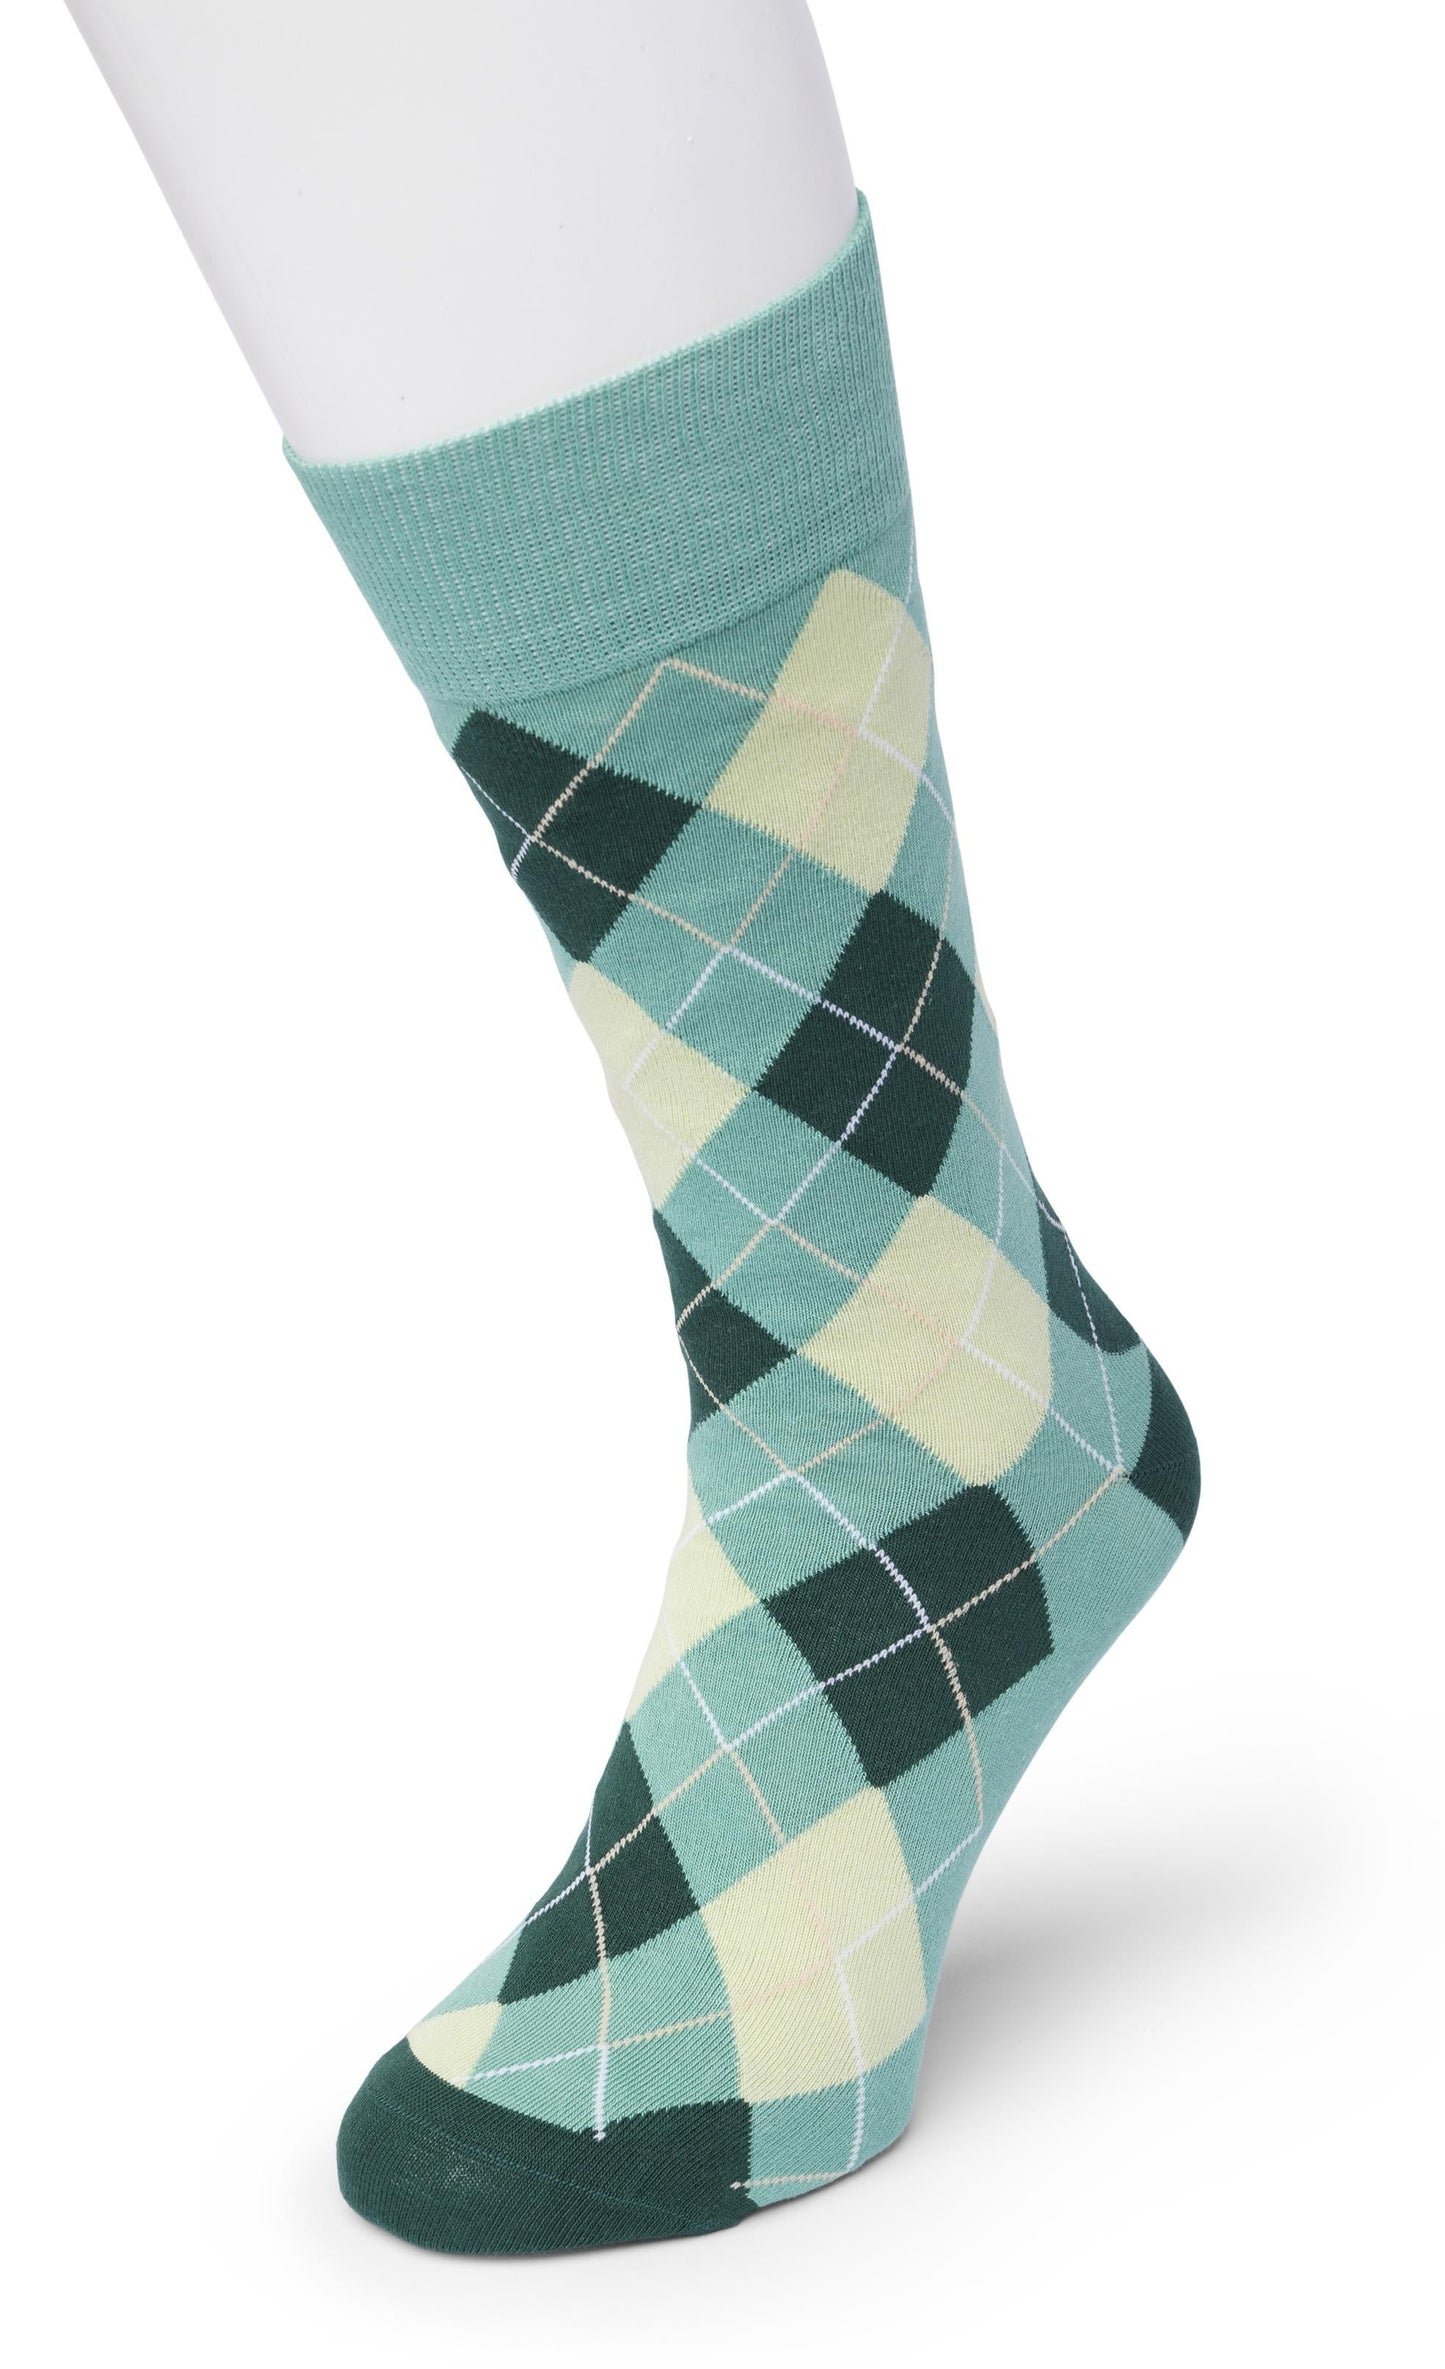 Bonnie Doon BP211122 Argyle Sock - Emerald, mint and pale green cotton ankle socks with a golf style diamond argyle tartan check pattern.